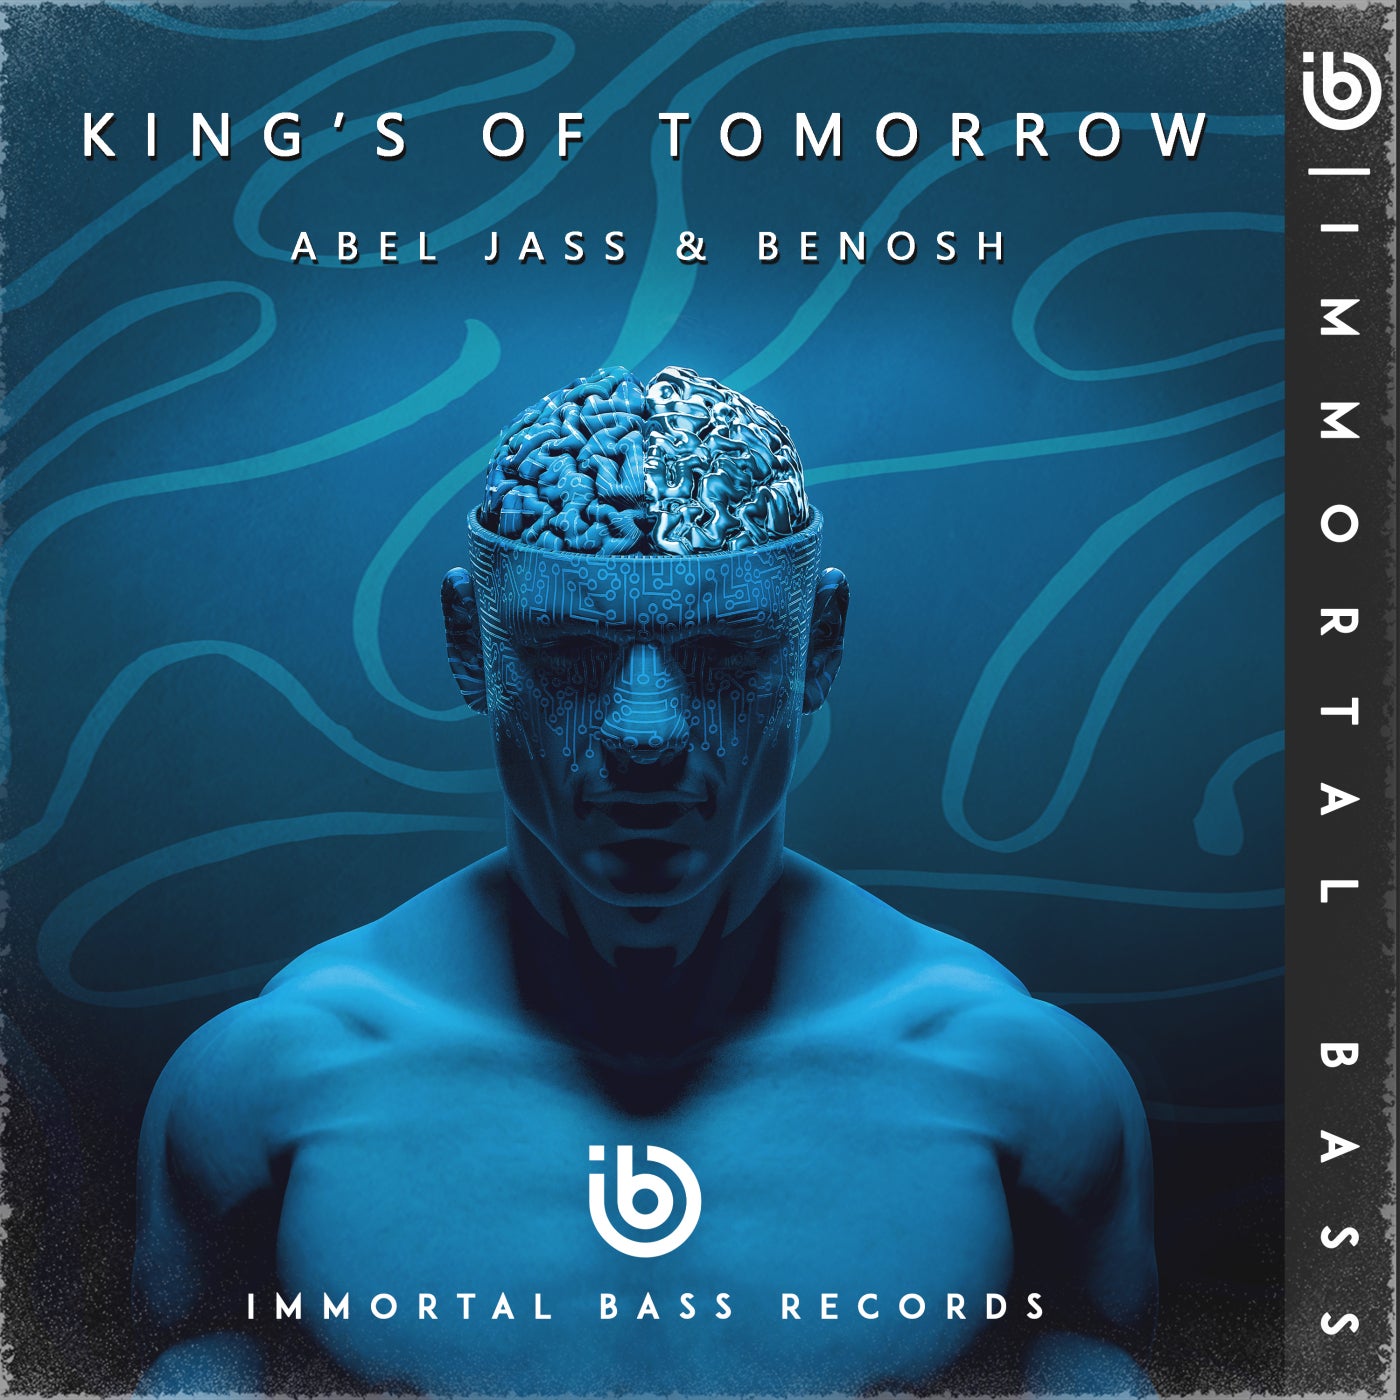 King's of Tomorrow